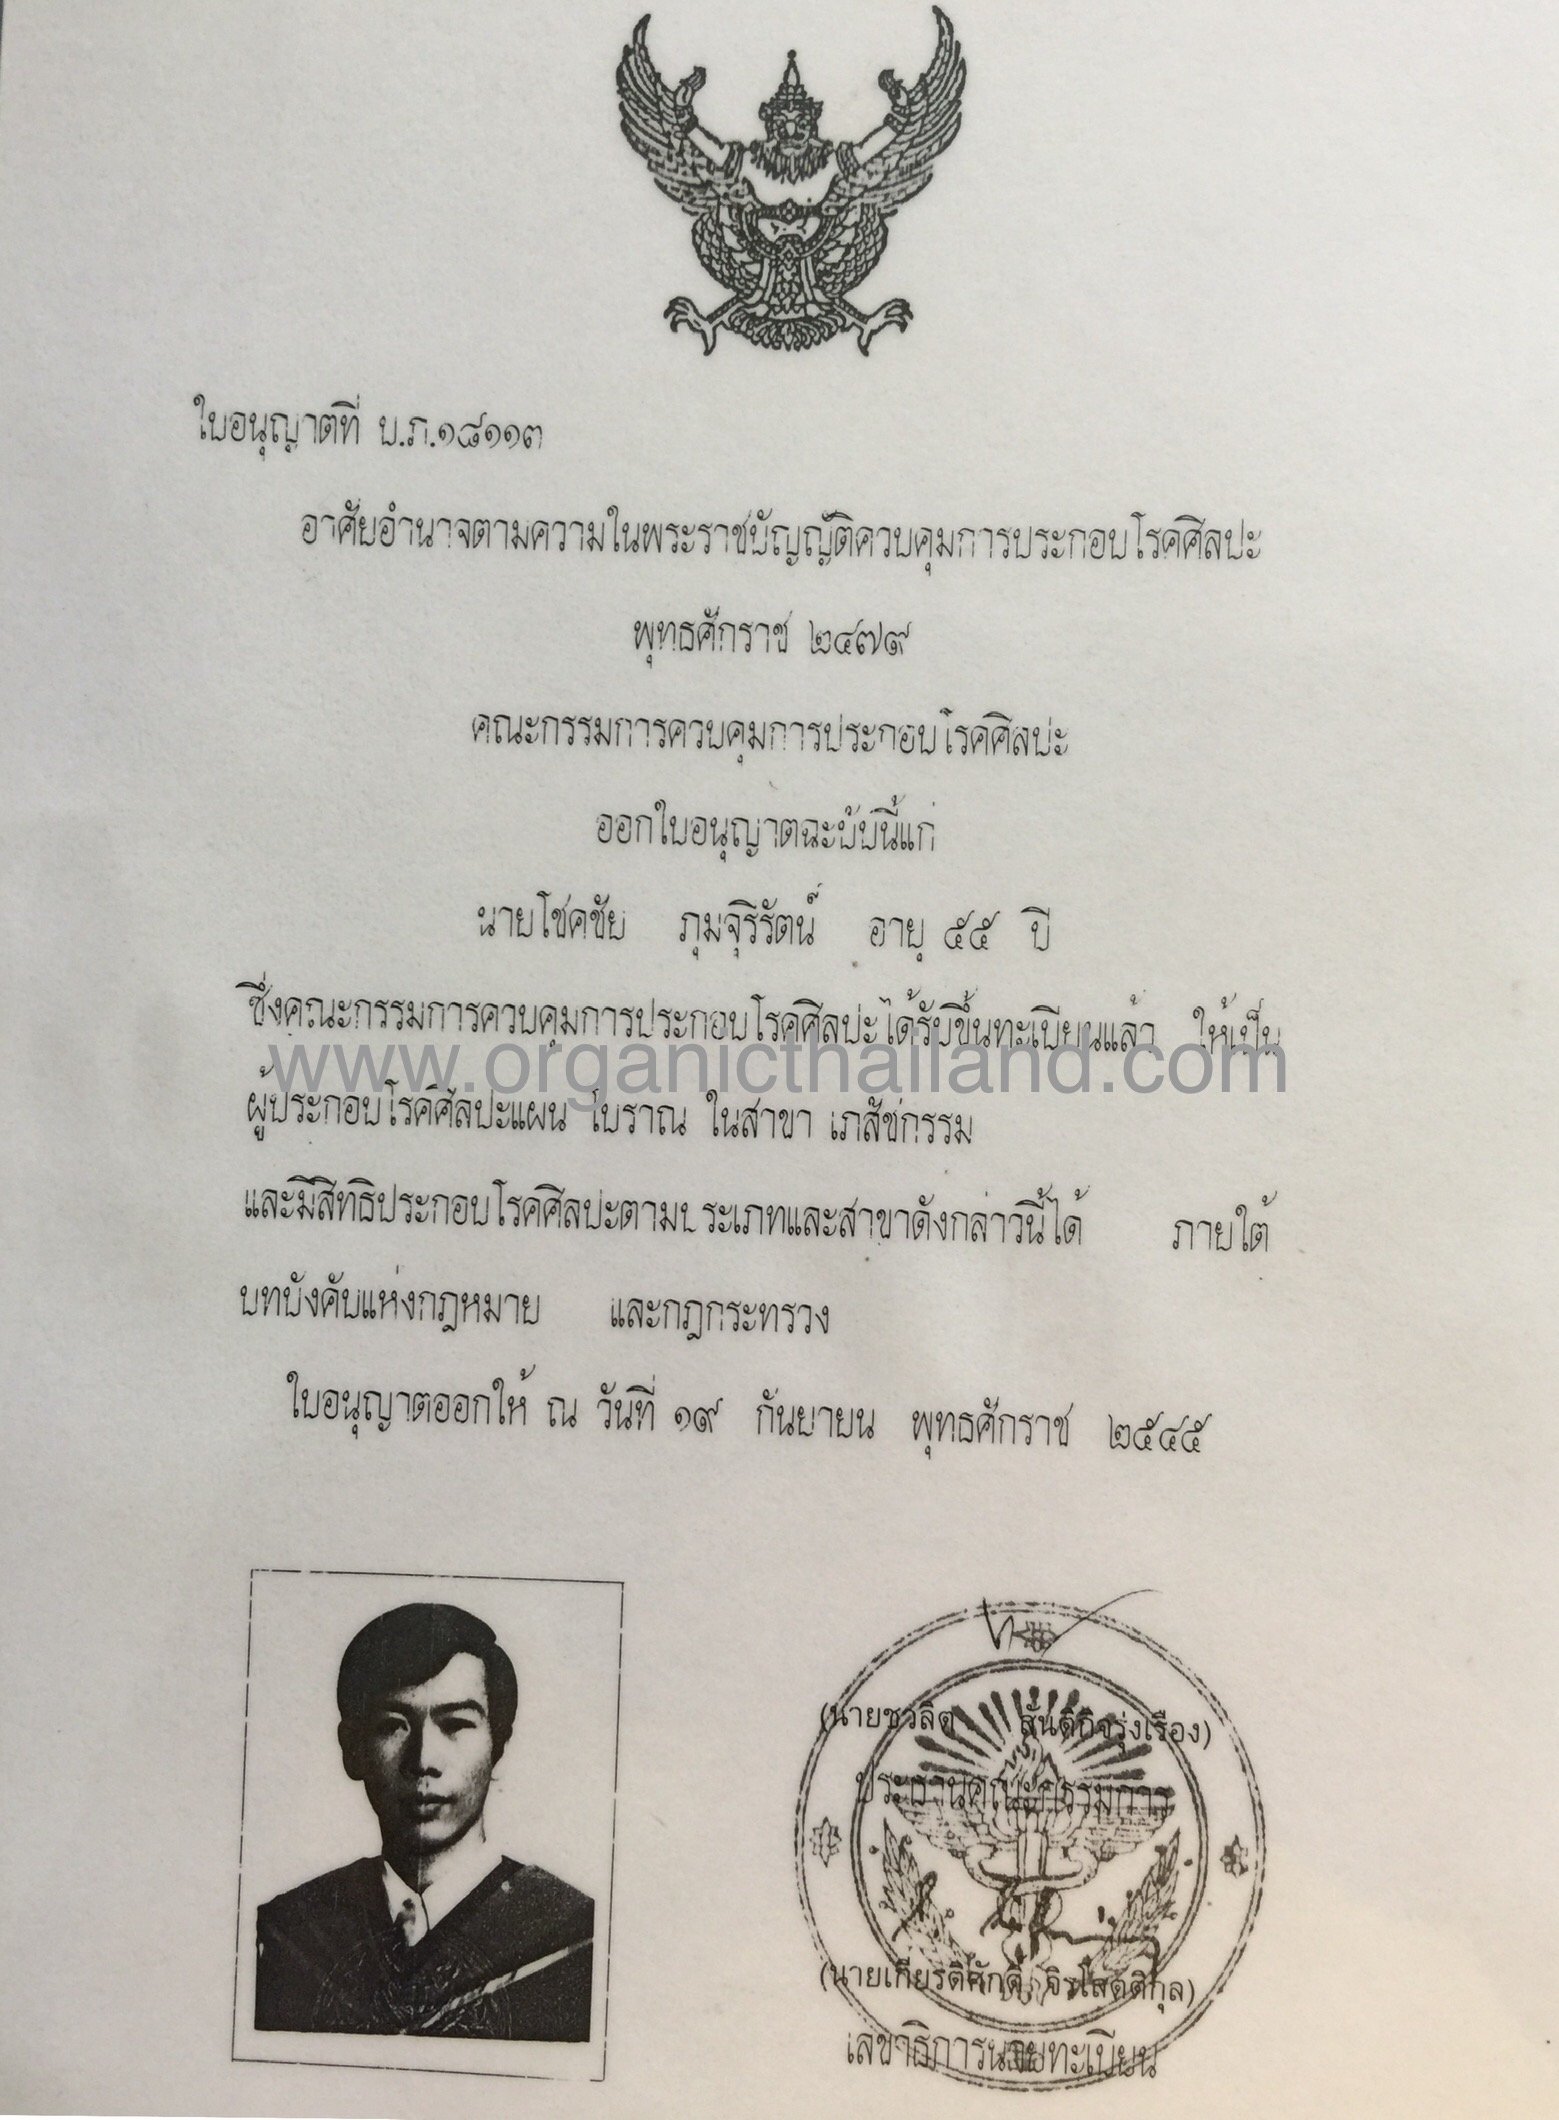 Certified Thai Pharmaist